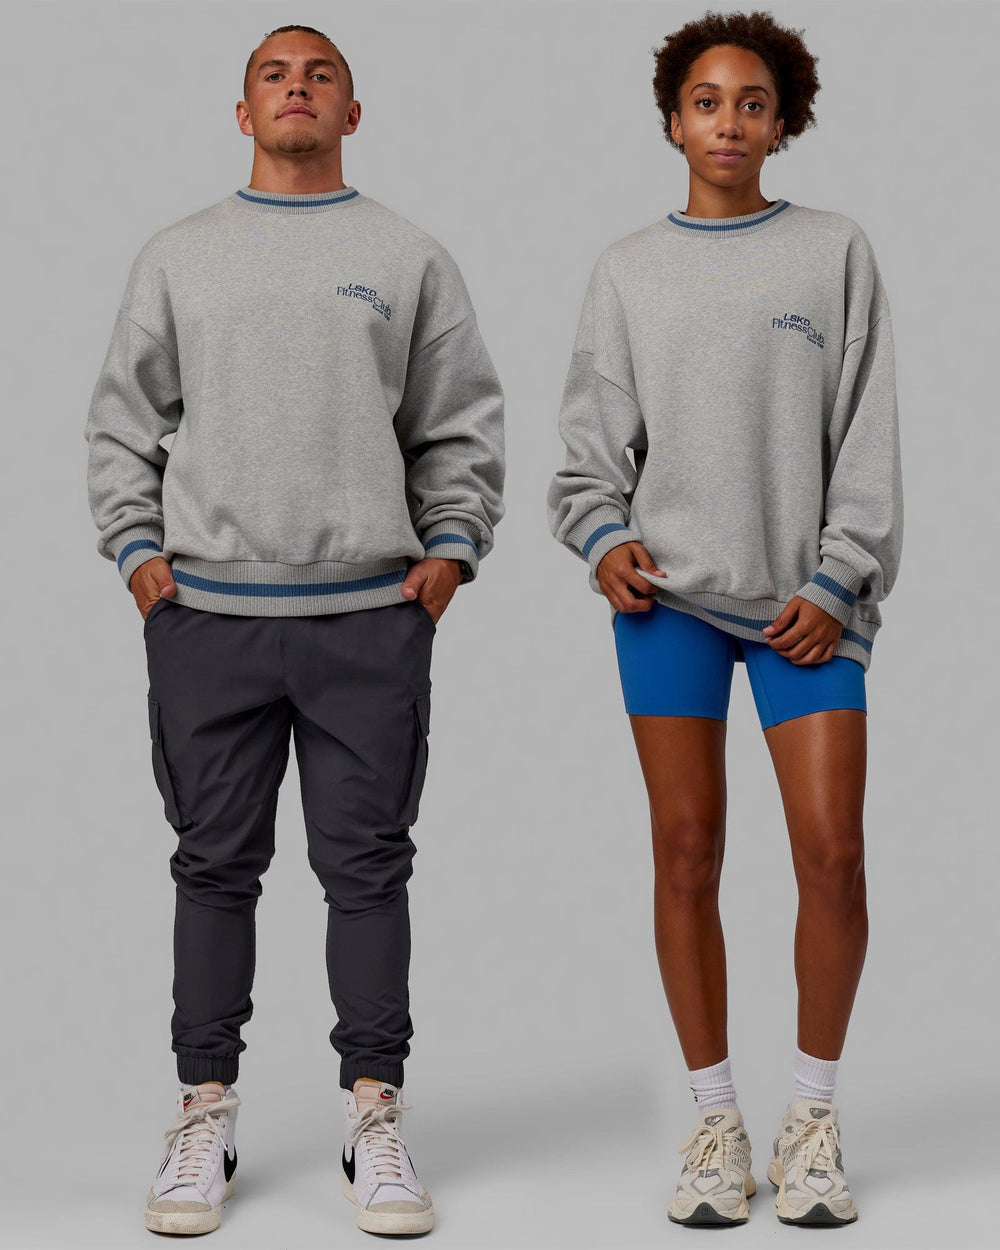 Duo wearing Unisex Fitness Club Sweater Oversize - Lt Grey Marl-Elemental Blue